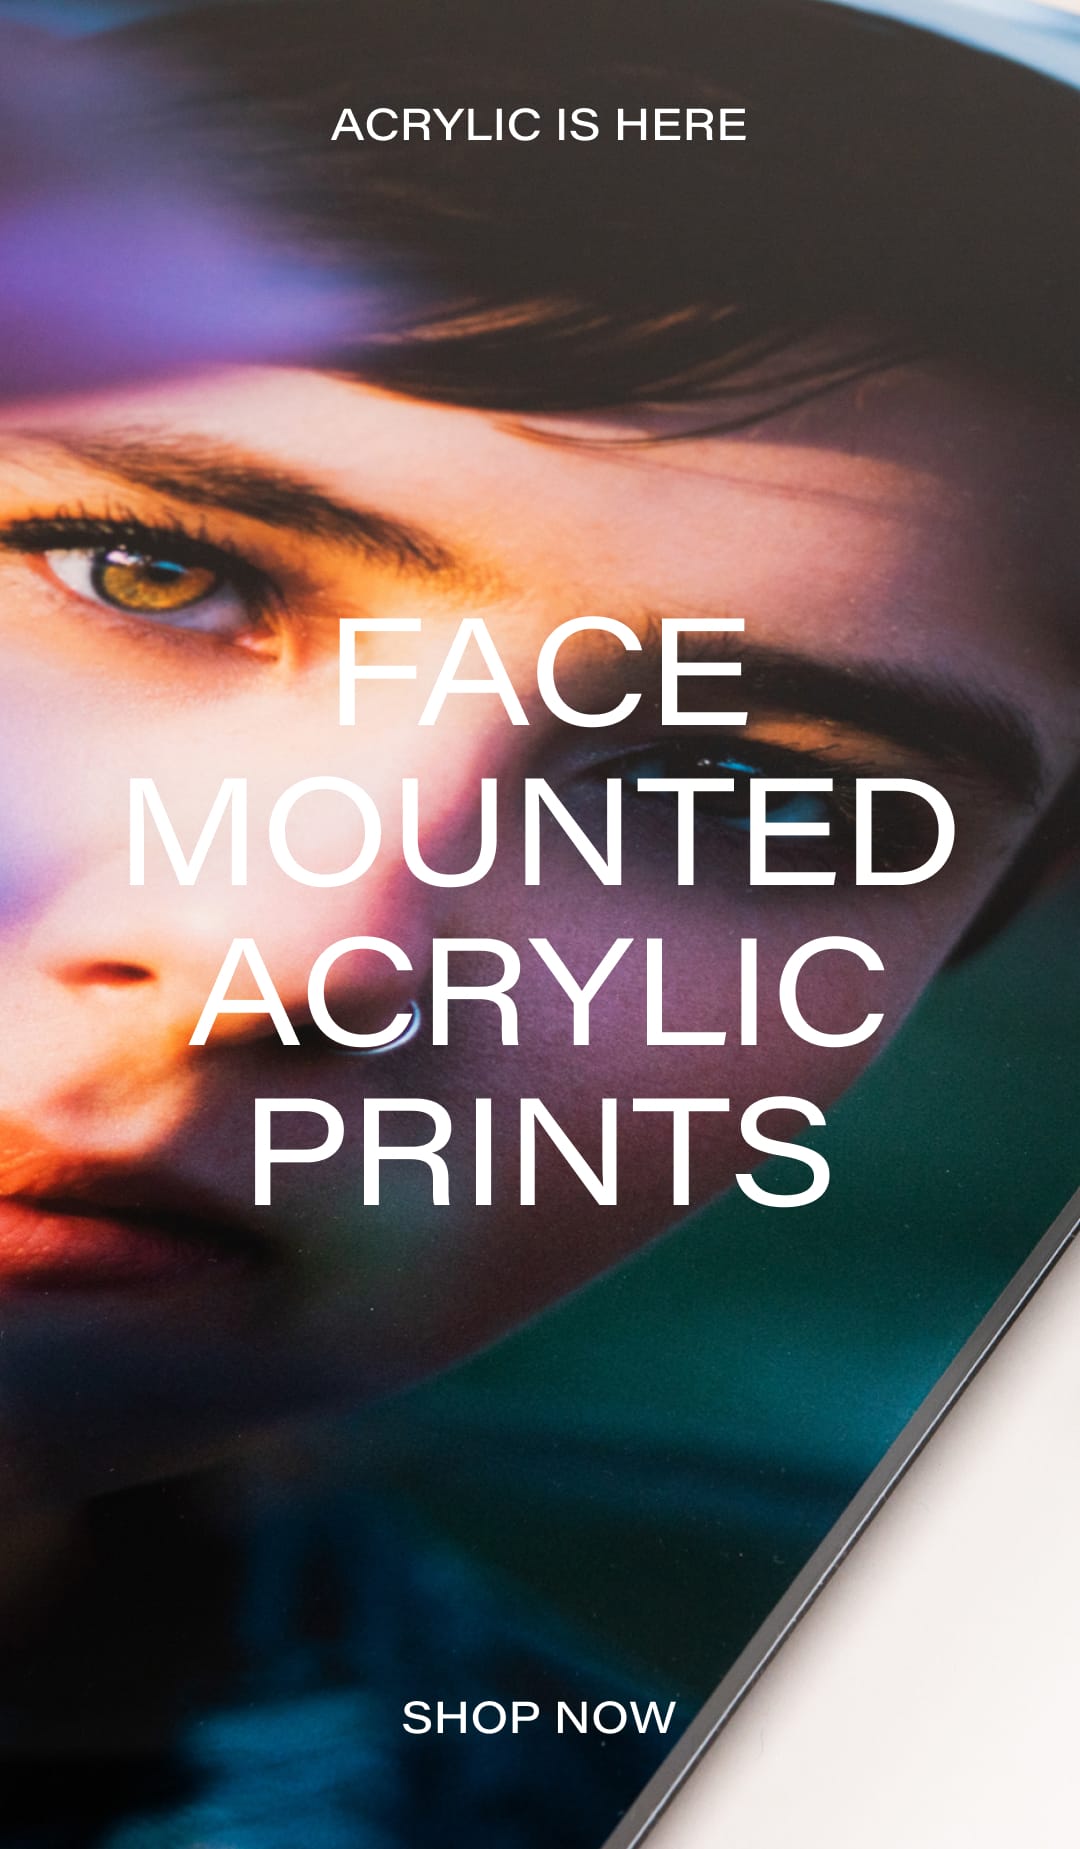 Face Mounted Acrylic Prints